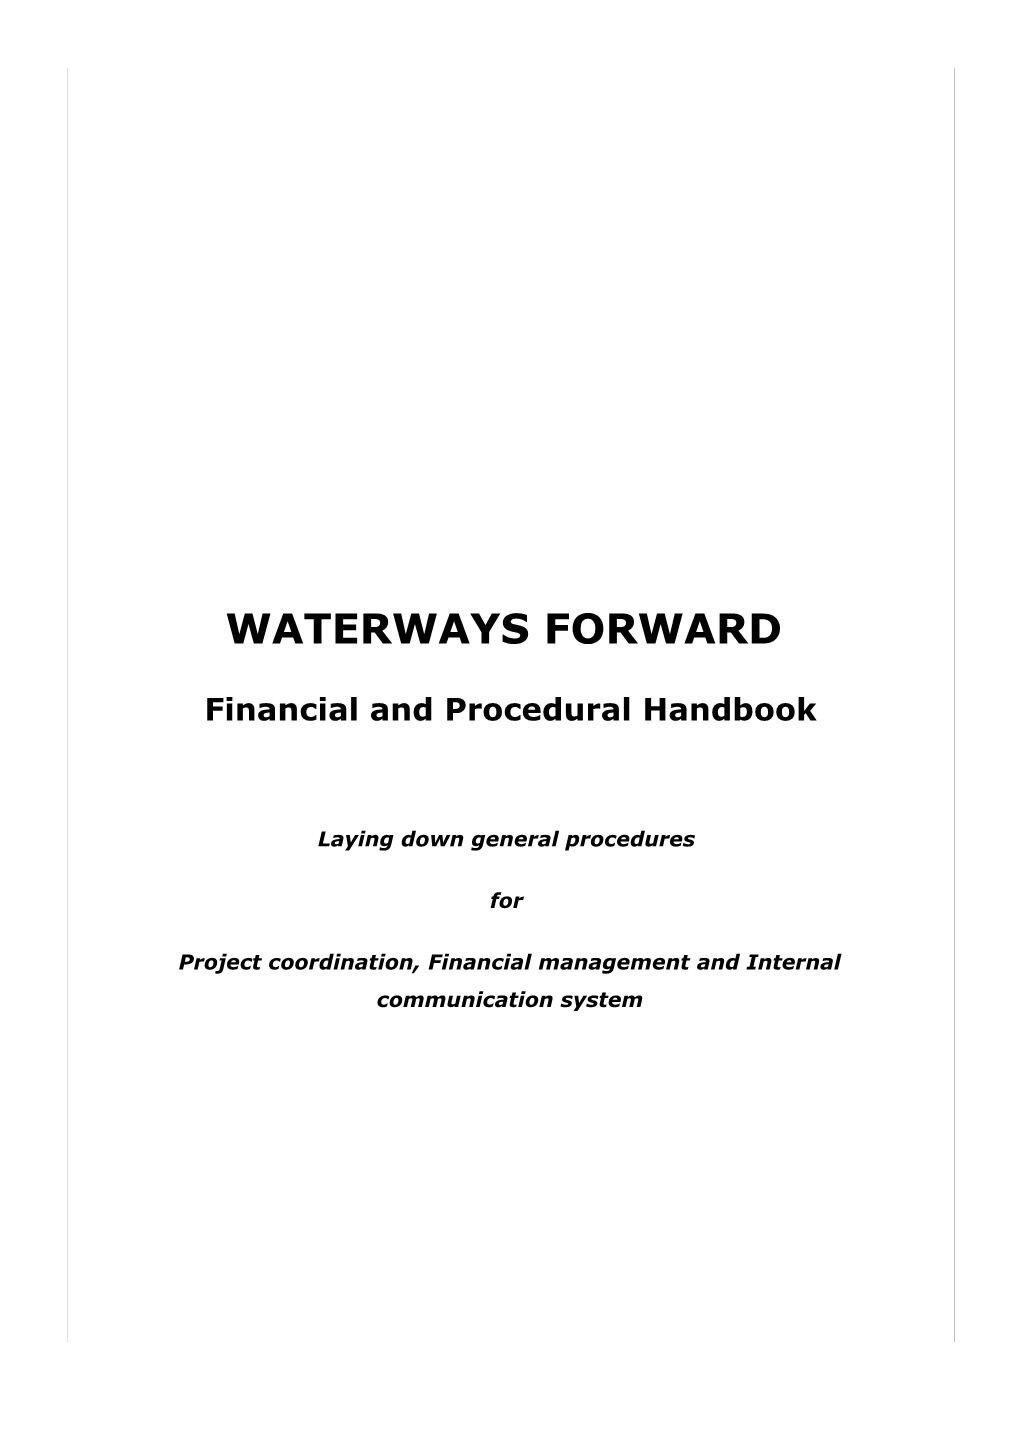 Financial and Procedural Handbook